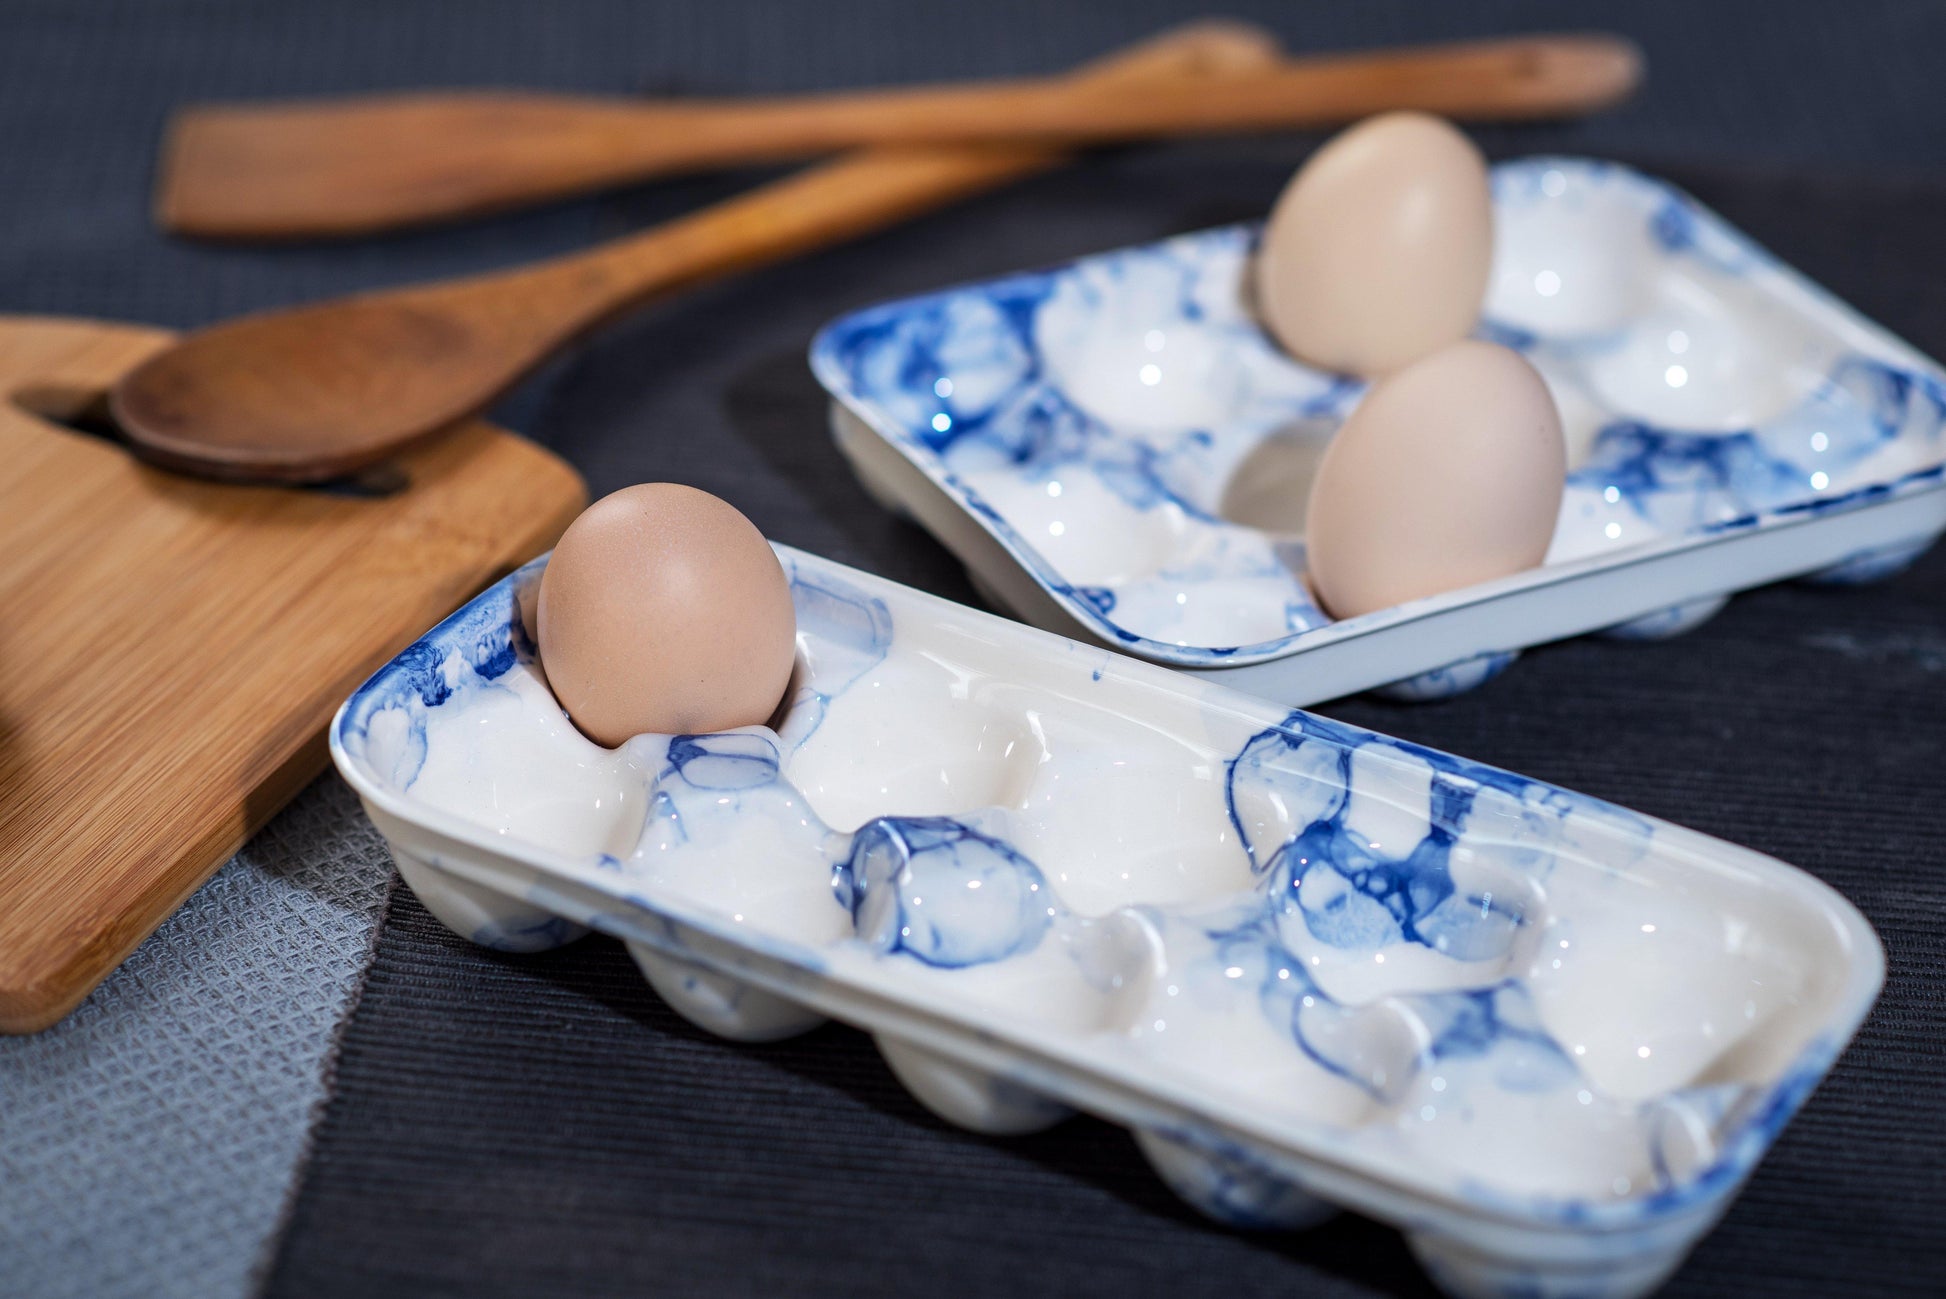 Porcelain egg holder - white with blue bubbles /10 eggs/ - ZLATNAporcelain